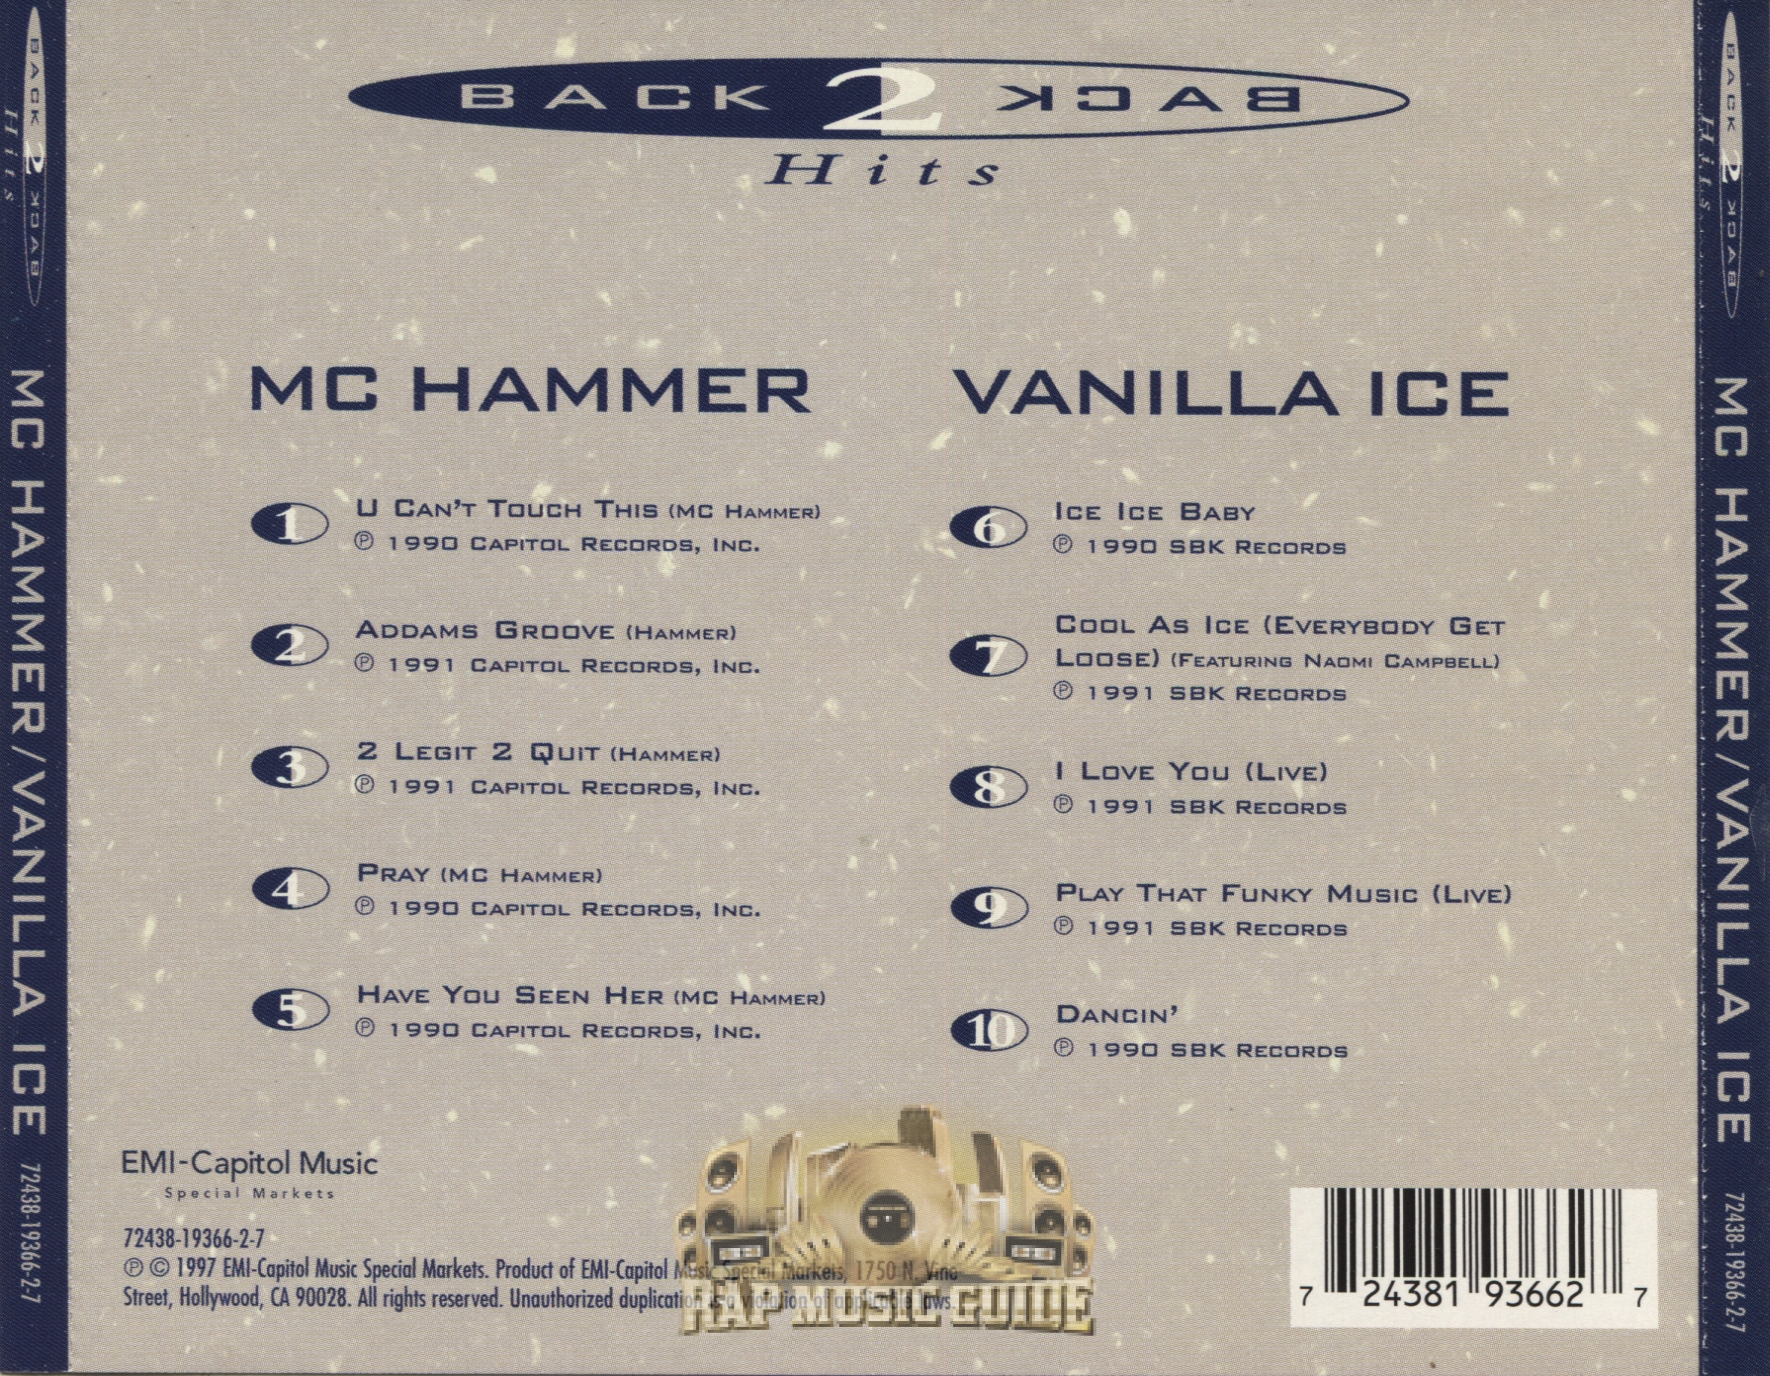 lever Fordeling blomst MC Hammer & Vanilla Ice - Back 2 Back Hits: CD | Rap Music Guide